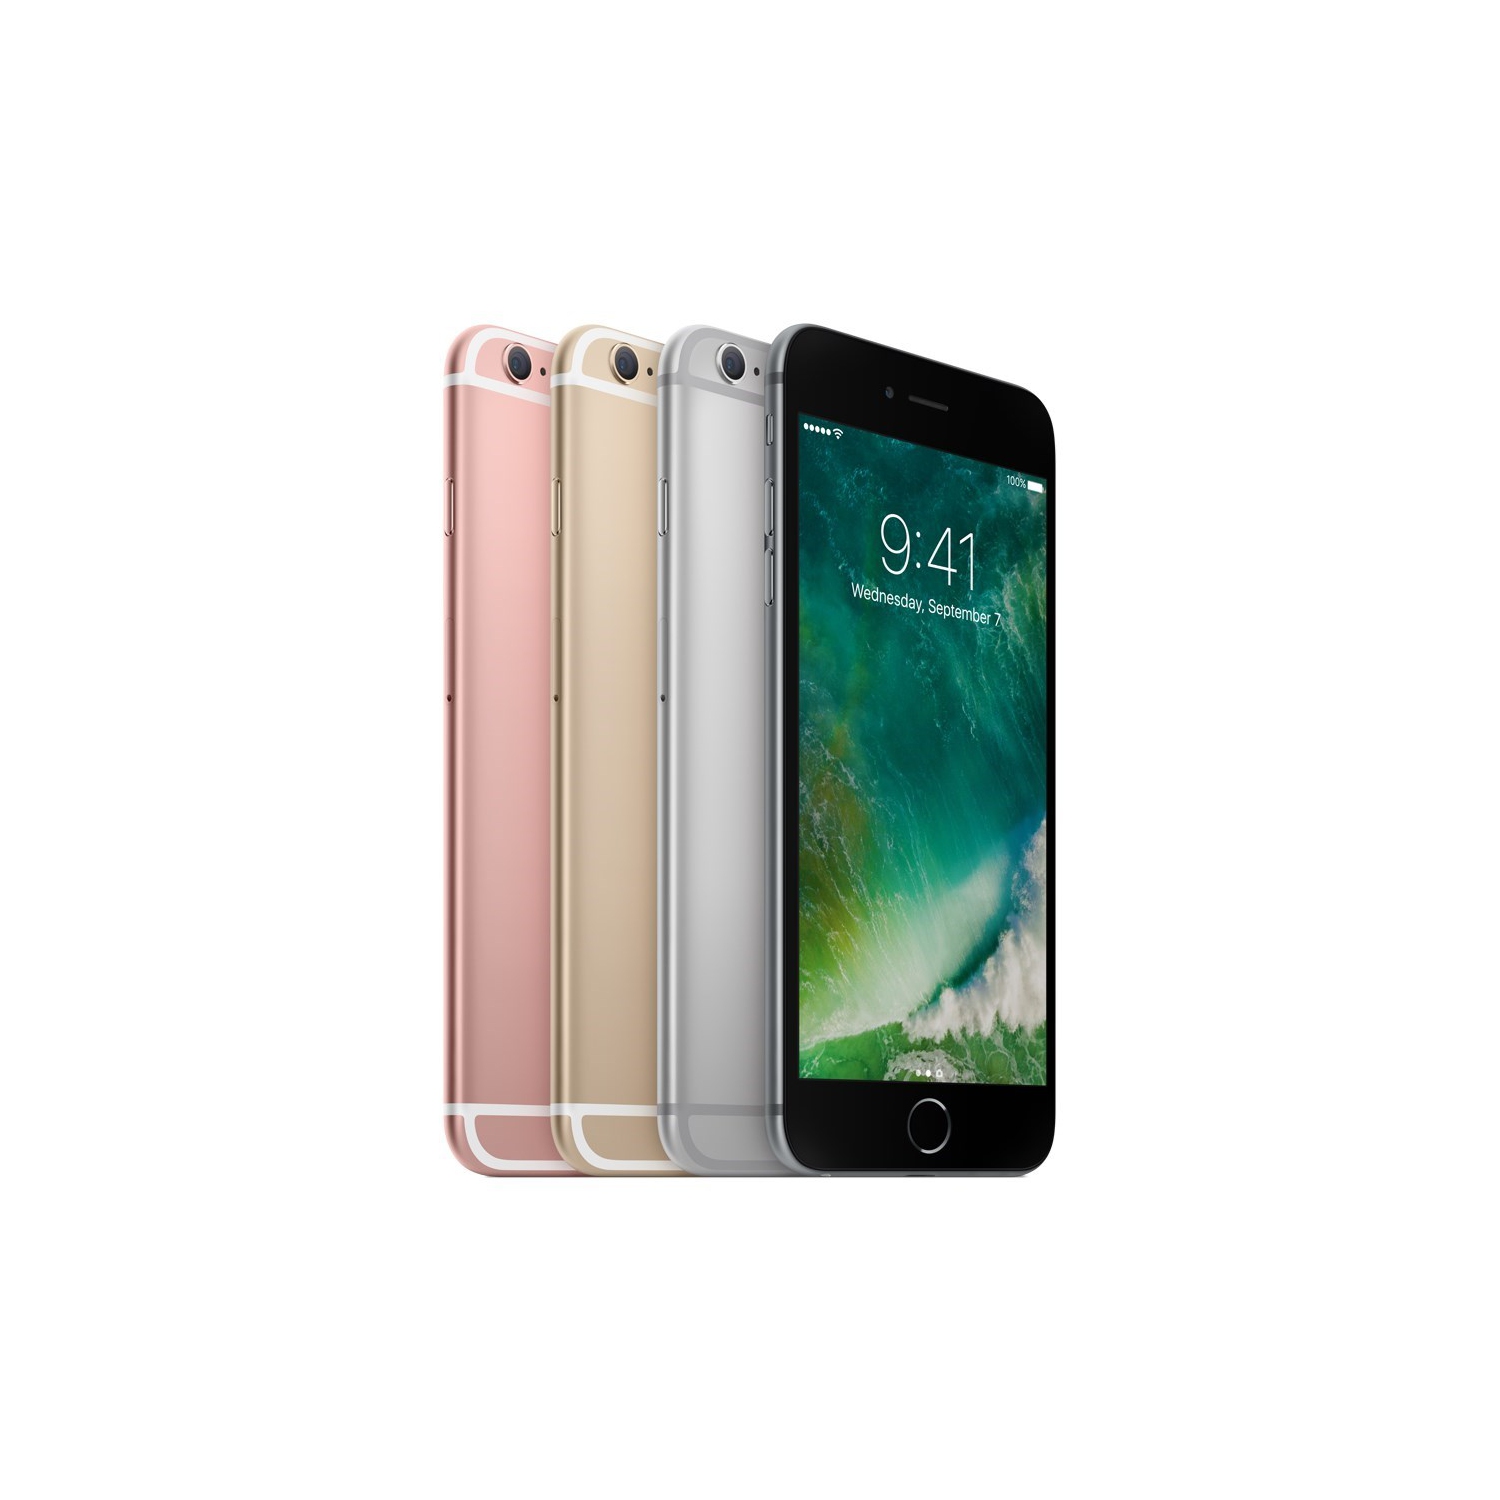 Refurbished (Good) - Apple iPhone 6s Plus 64GB Smartphone - Space Gray - Unlocked